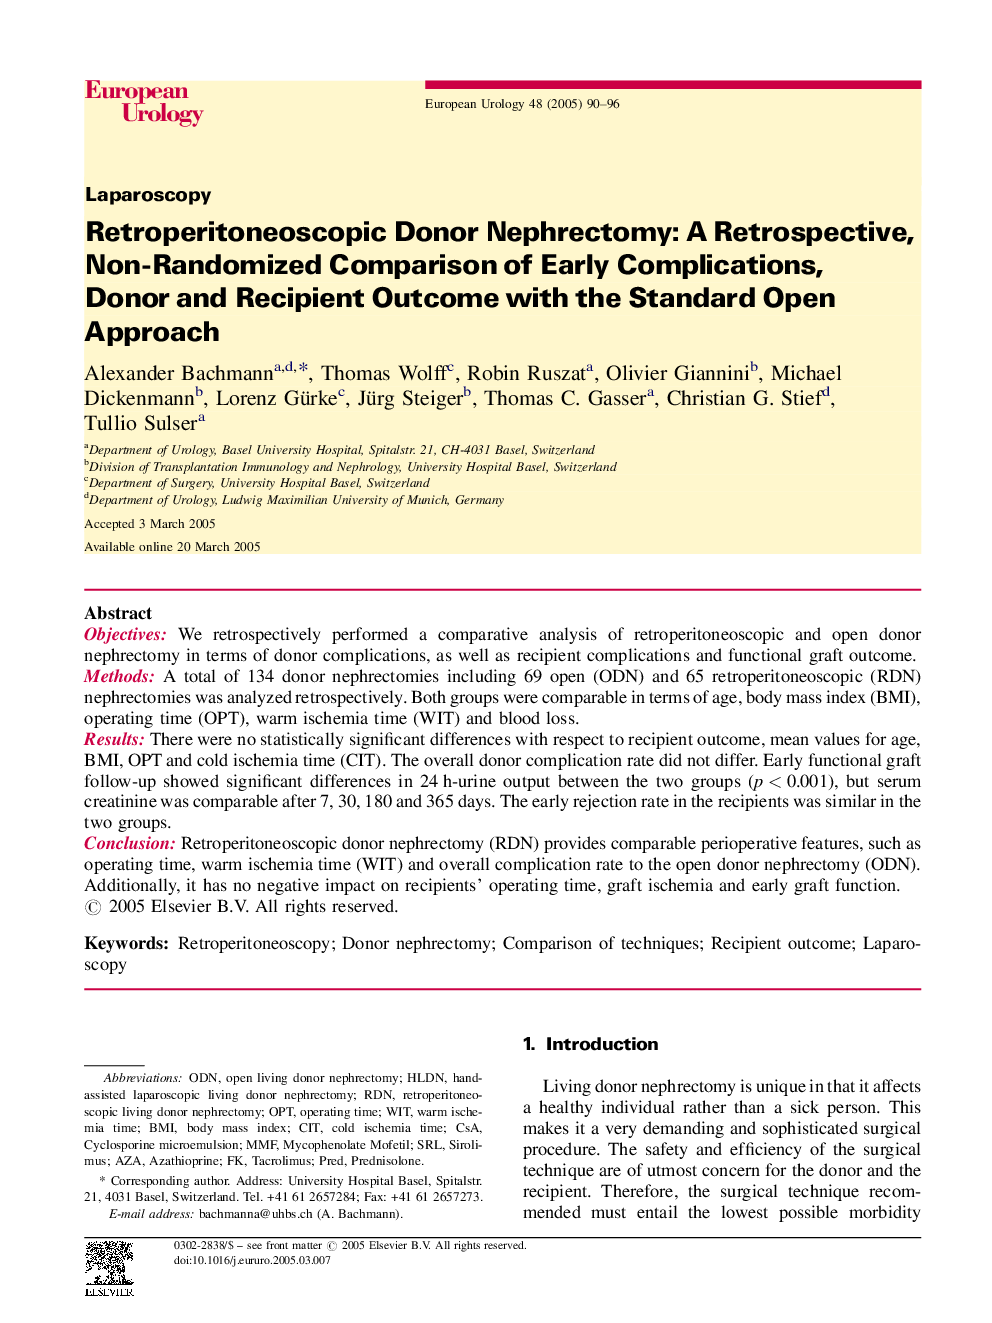 Retroperitoneoscopic Donor Nephrectomy: A Retrospective, Non-Randomized Comparison of Early Complications, Donor and Recipient Outcome with the Standard Open Approach